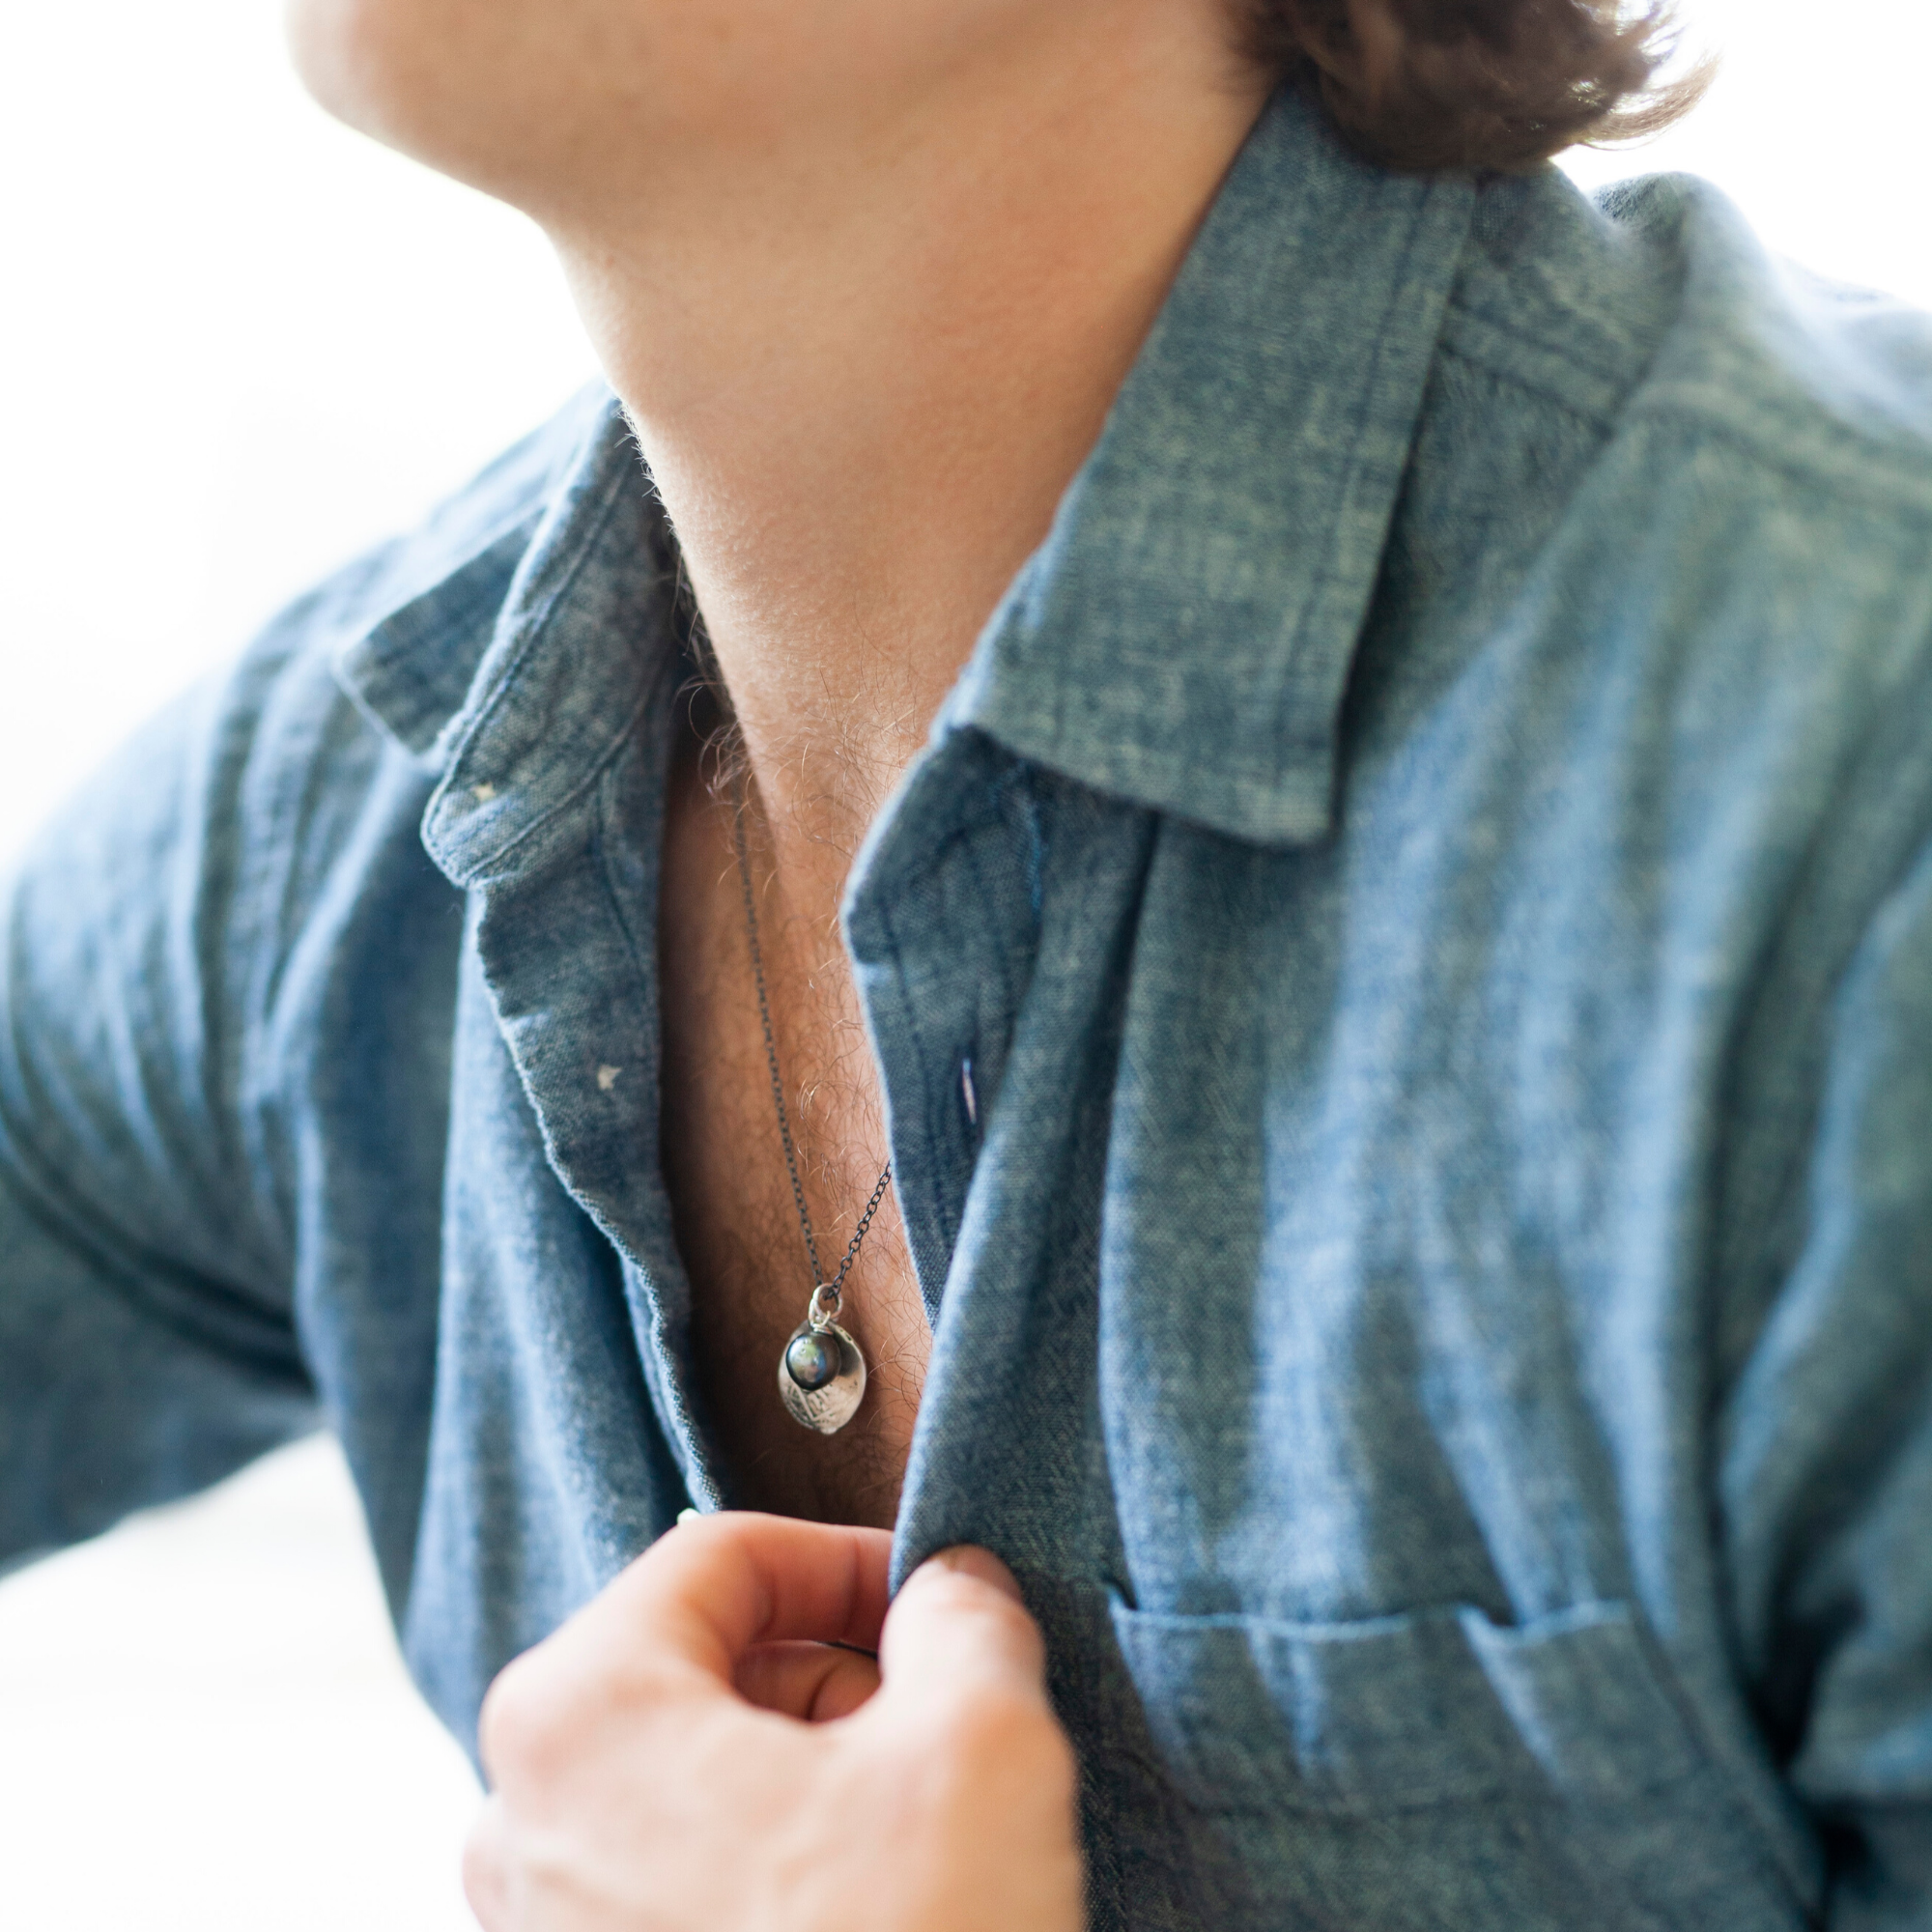 Featured image for “Felix Men's Leather Bracelet”